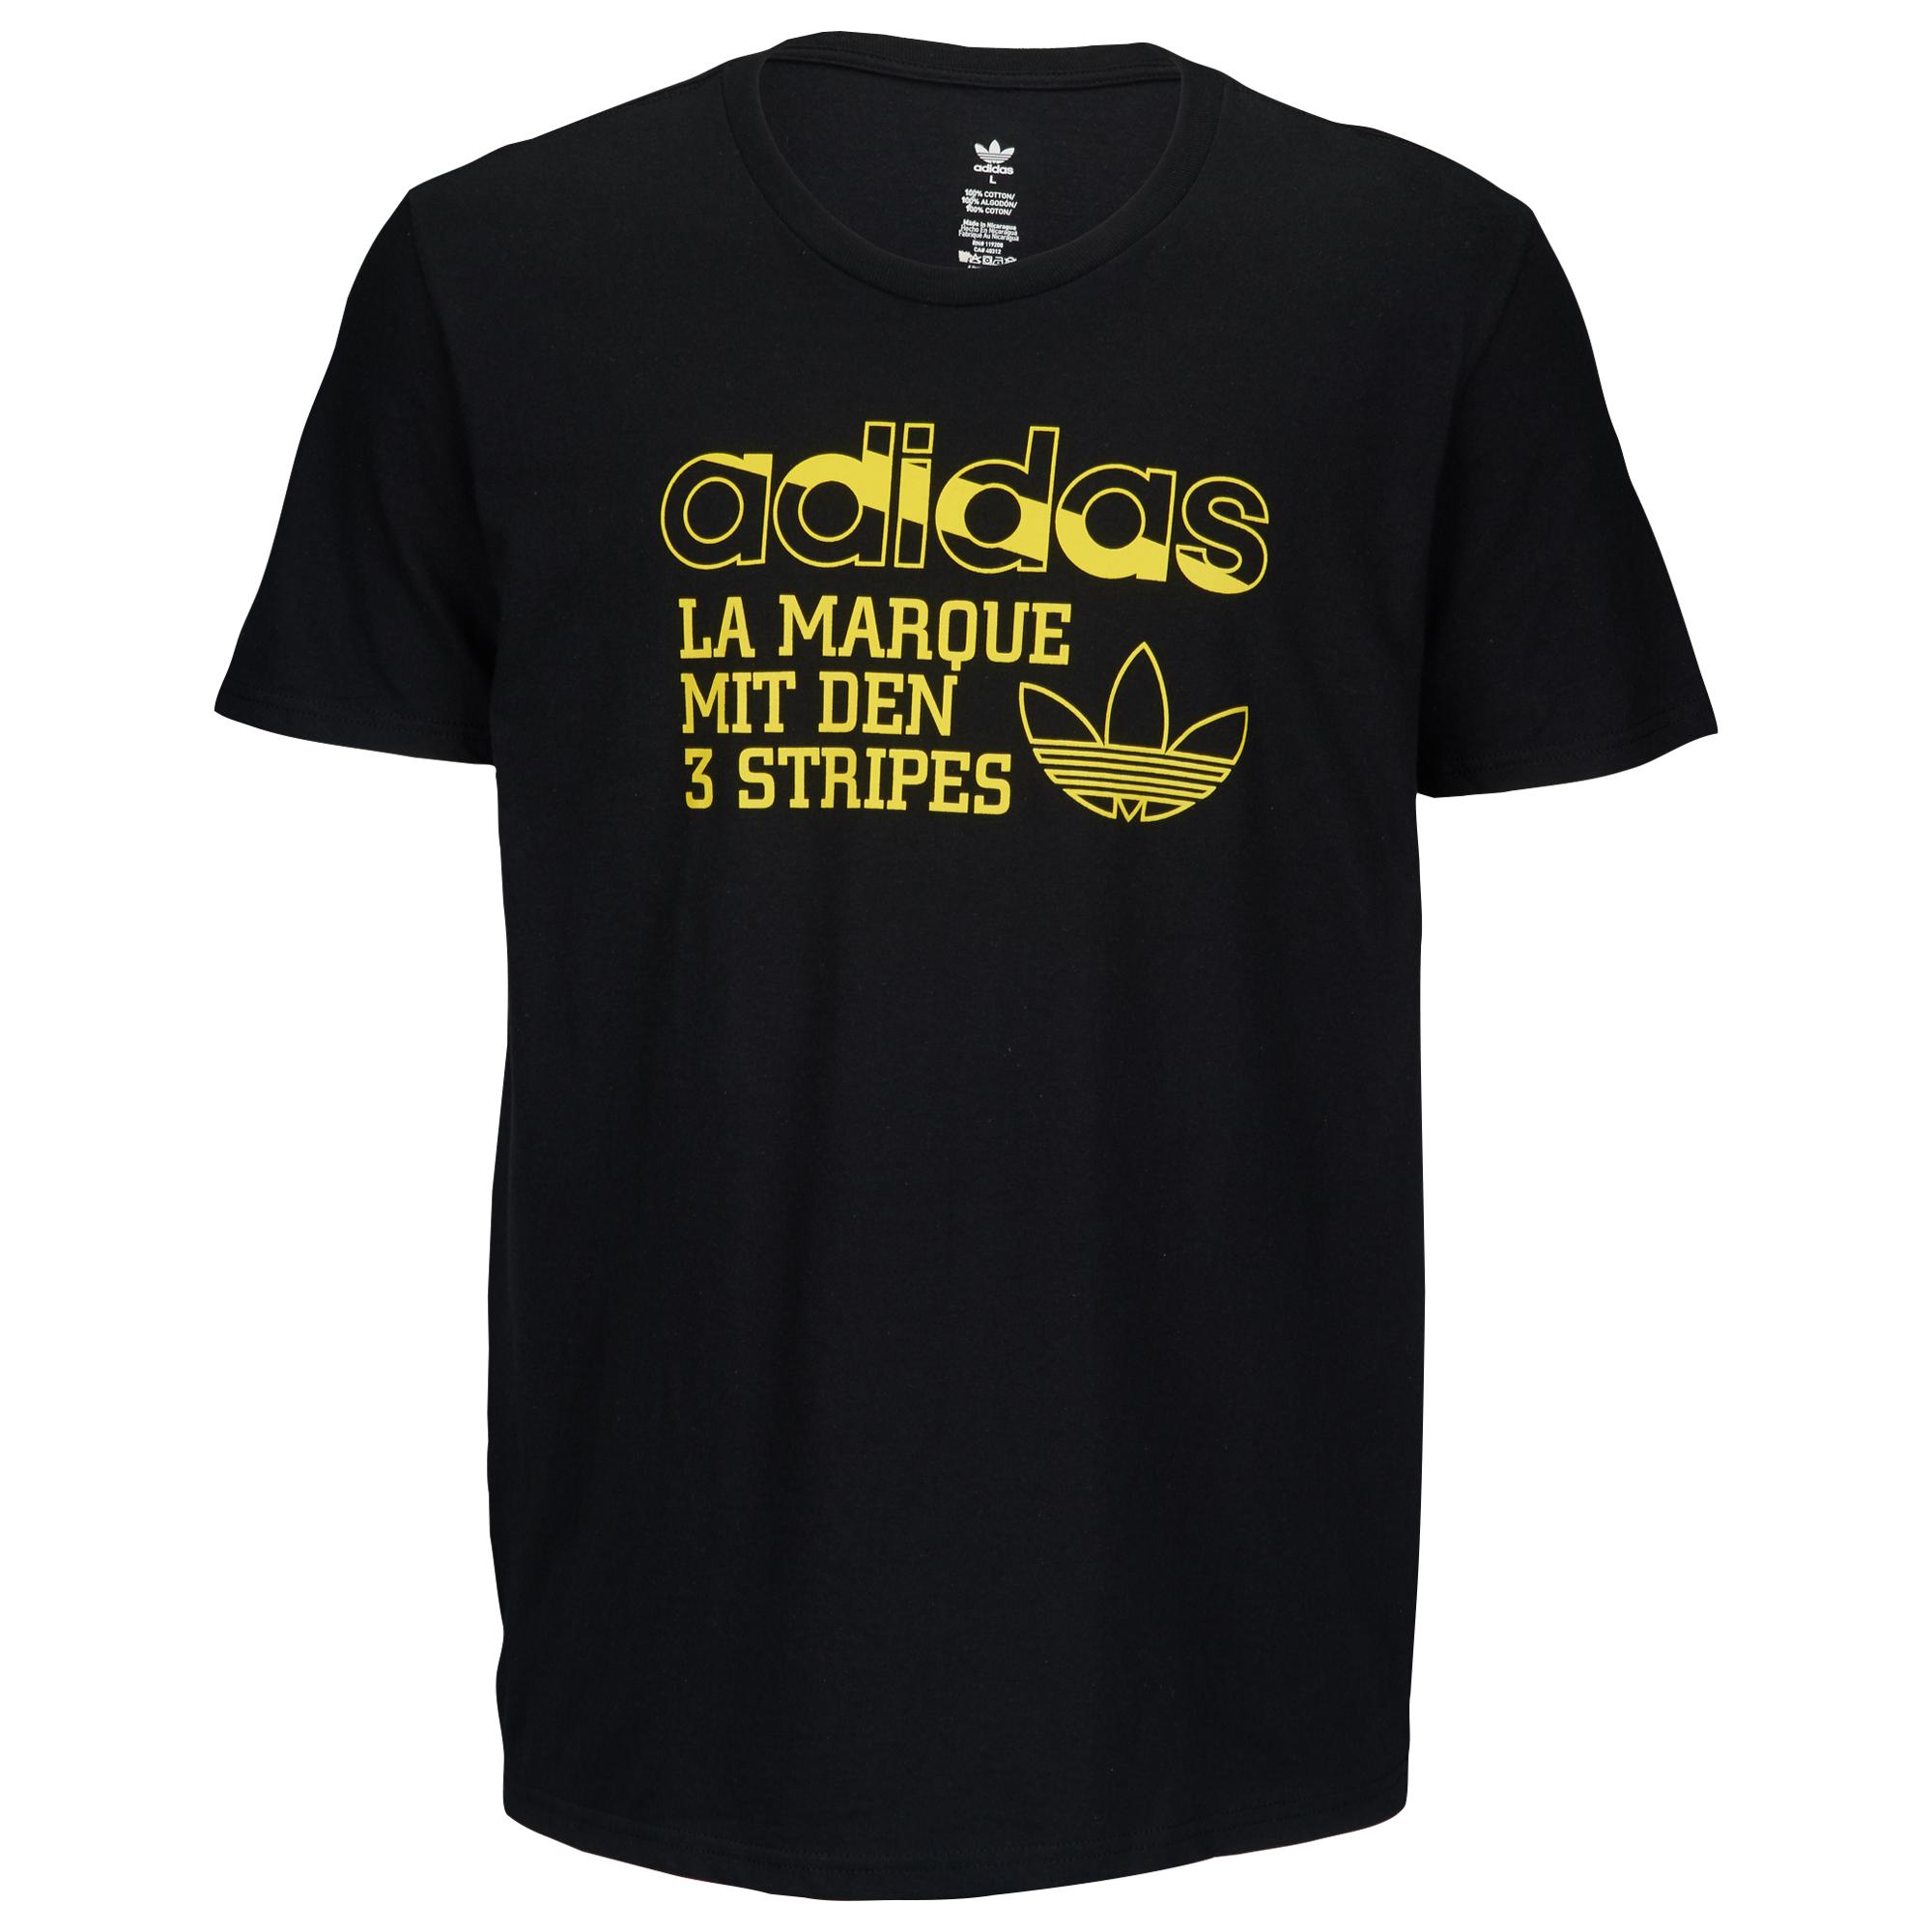 adidas Originals Graphic T-shirt in Black for Men - Lyst